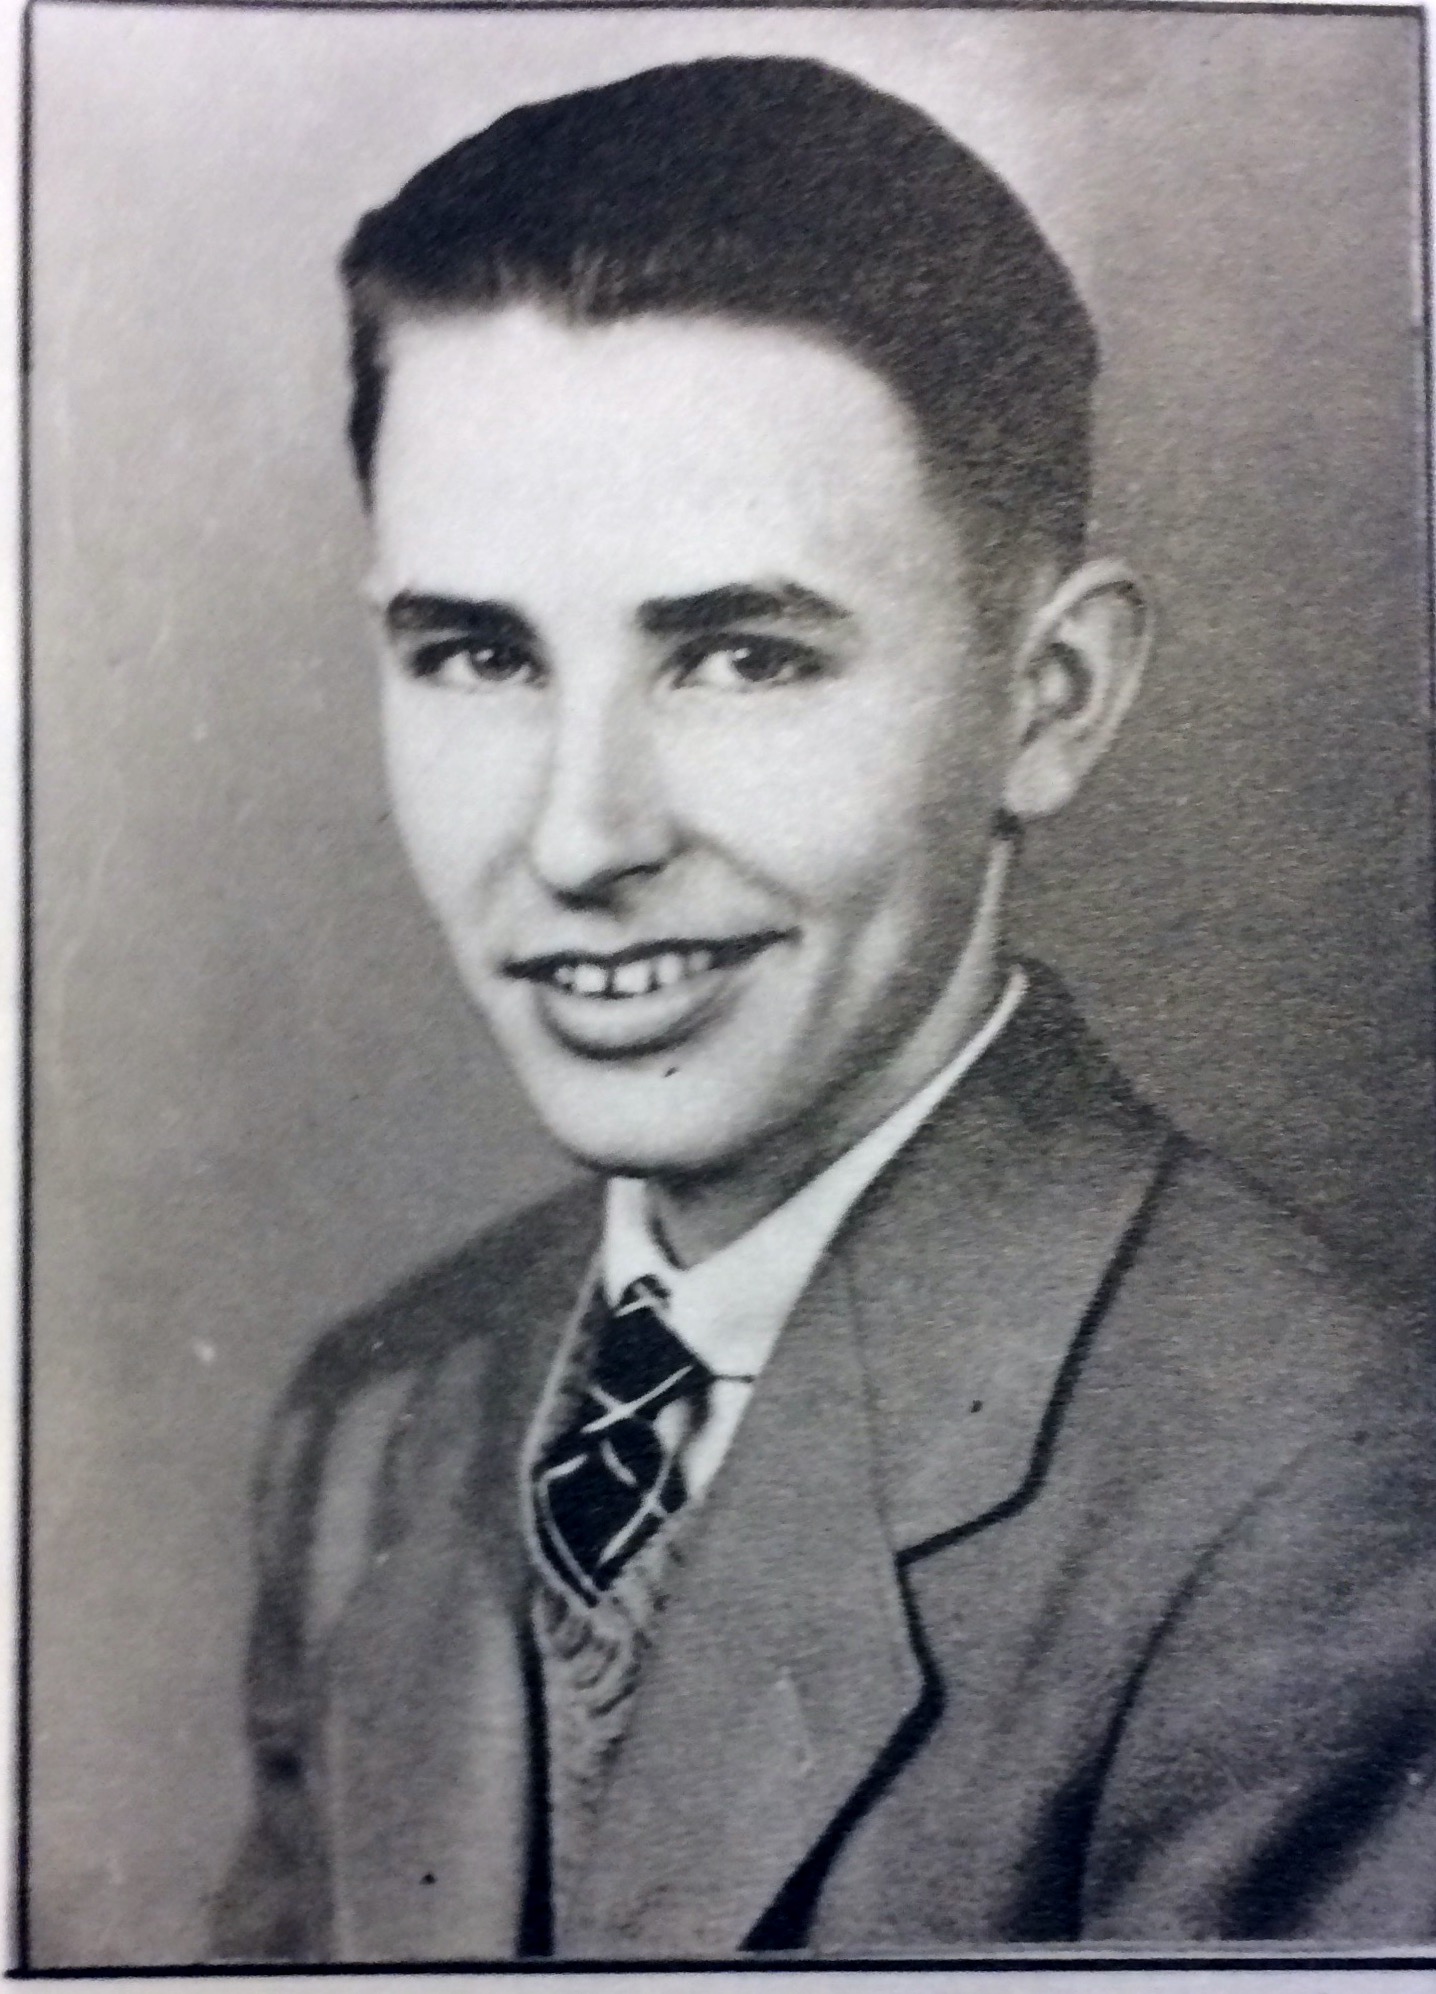 President Senior class at Yakima Valley Academy 1944